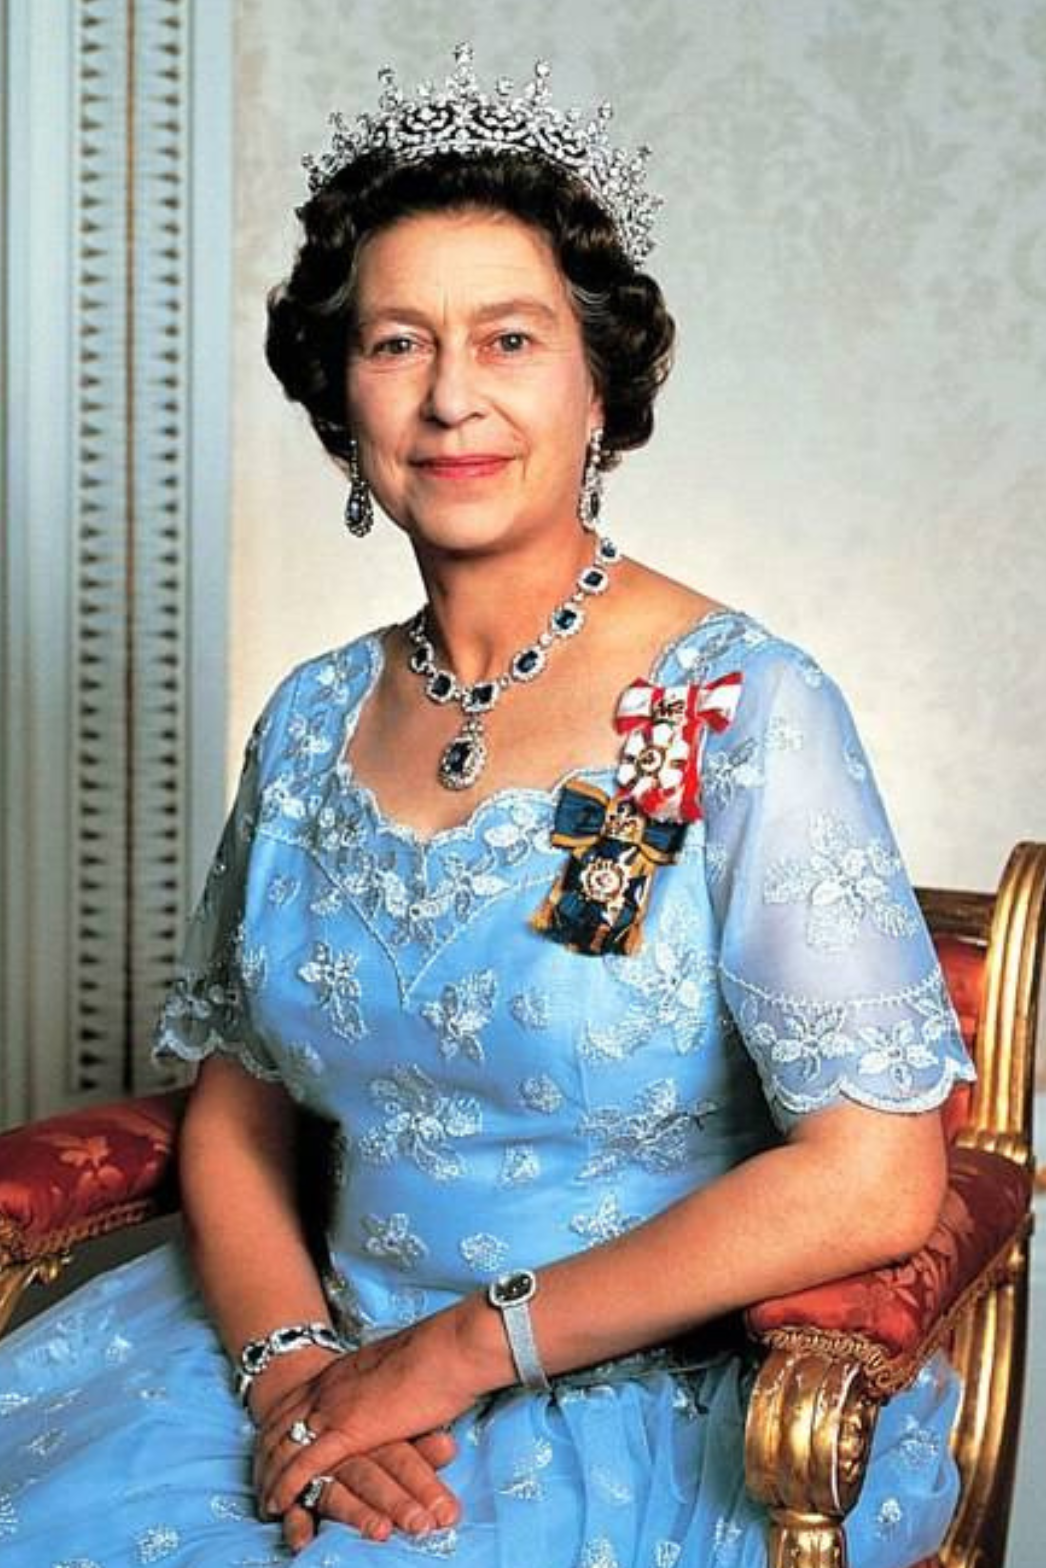 Queen Elizabeth II's Timeless Crowns